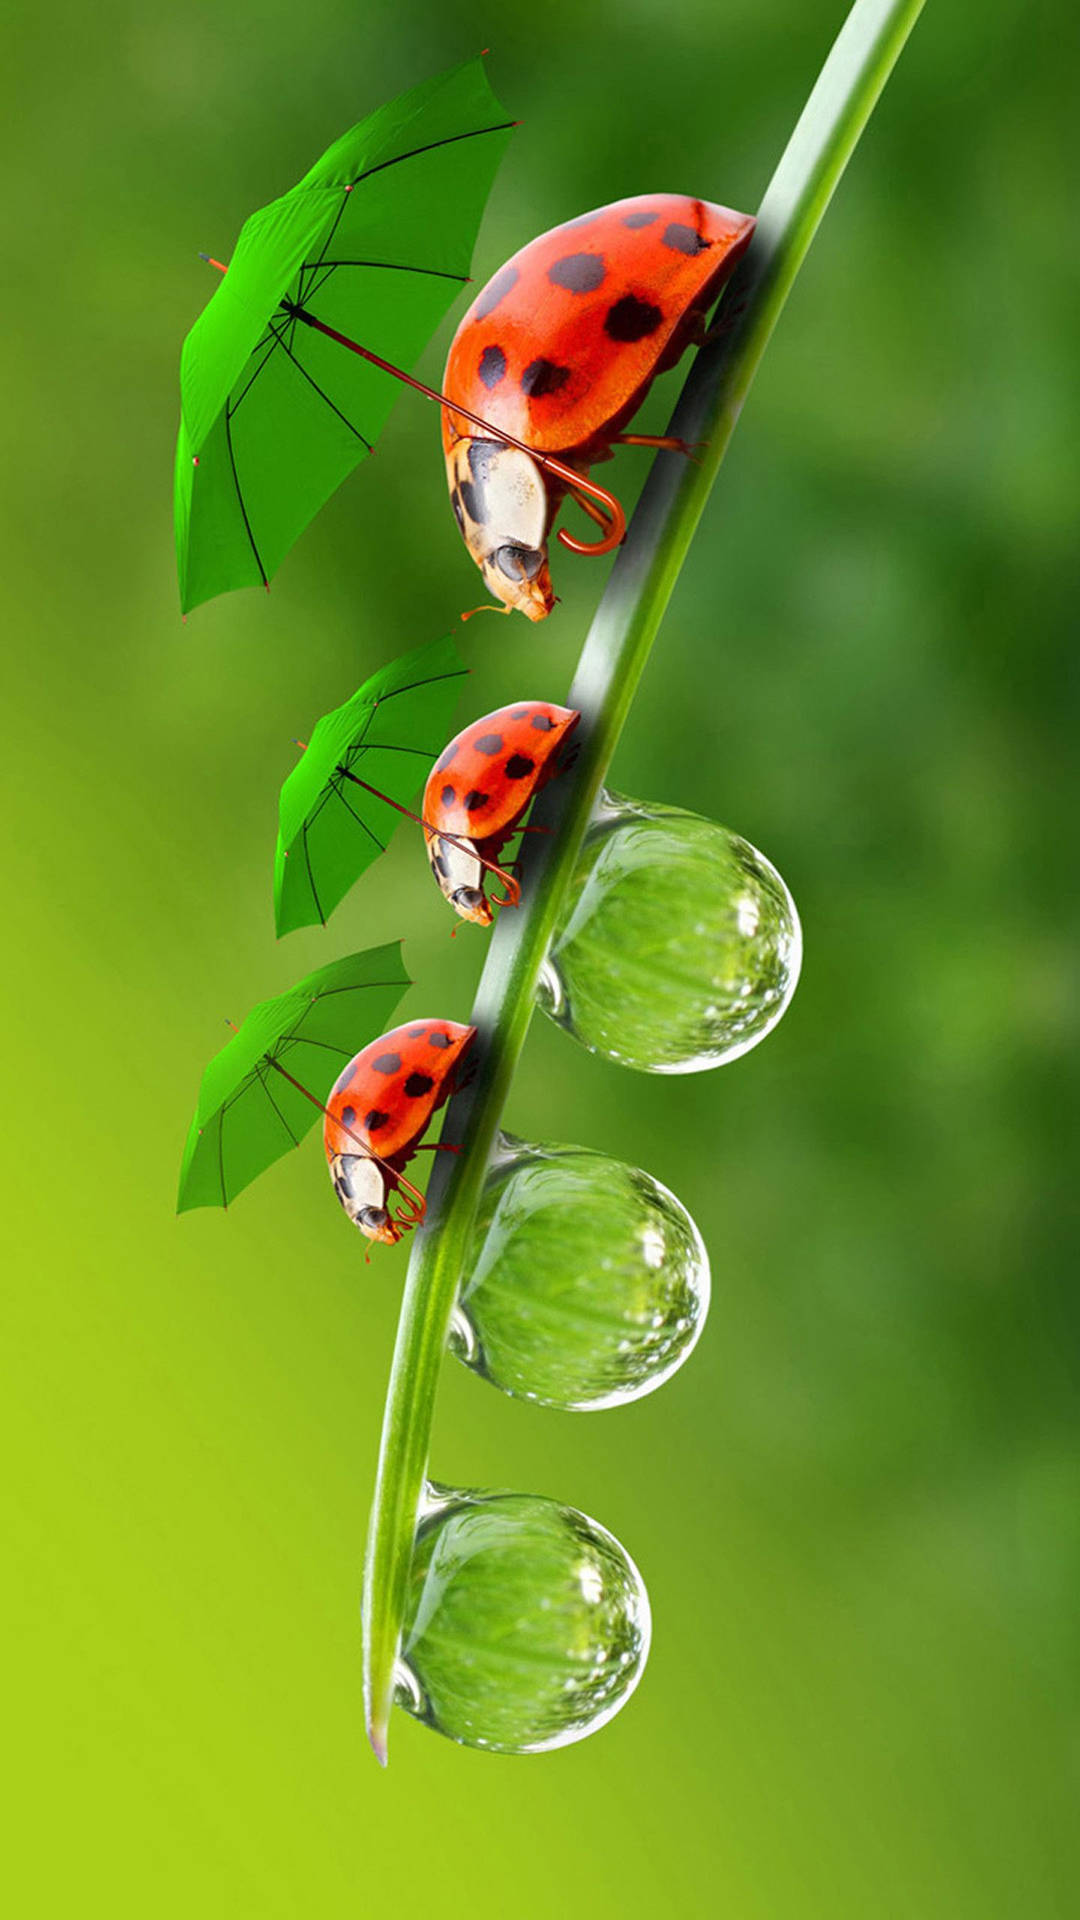 Ladybug Beetles With Green Umbrellas Wallpaper